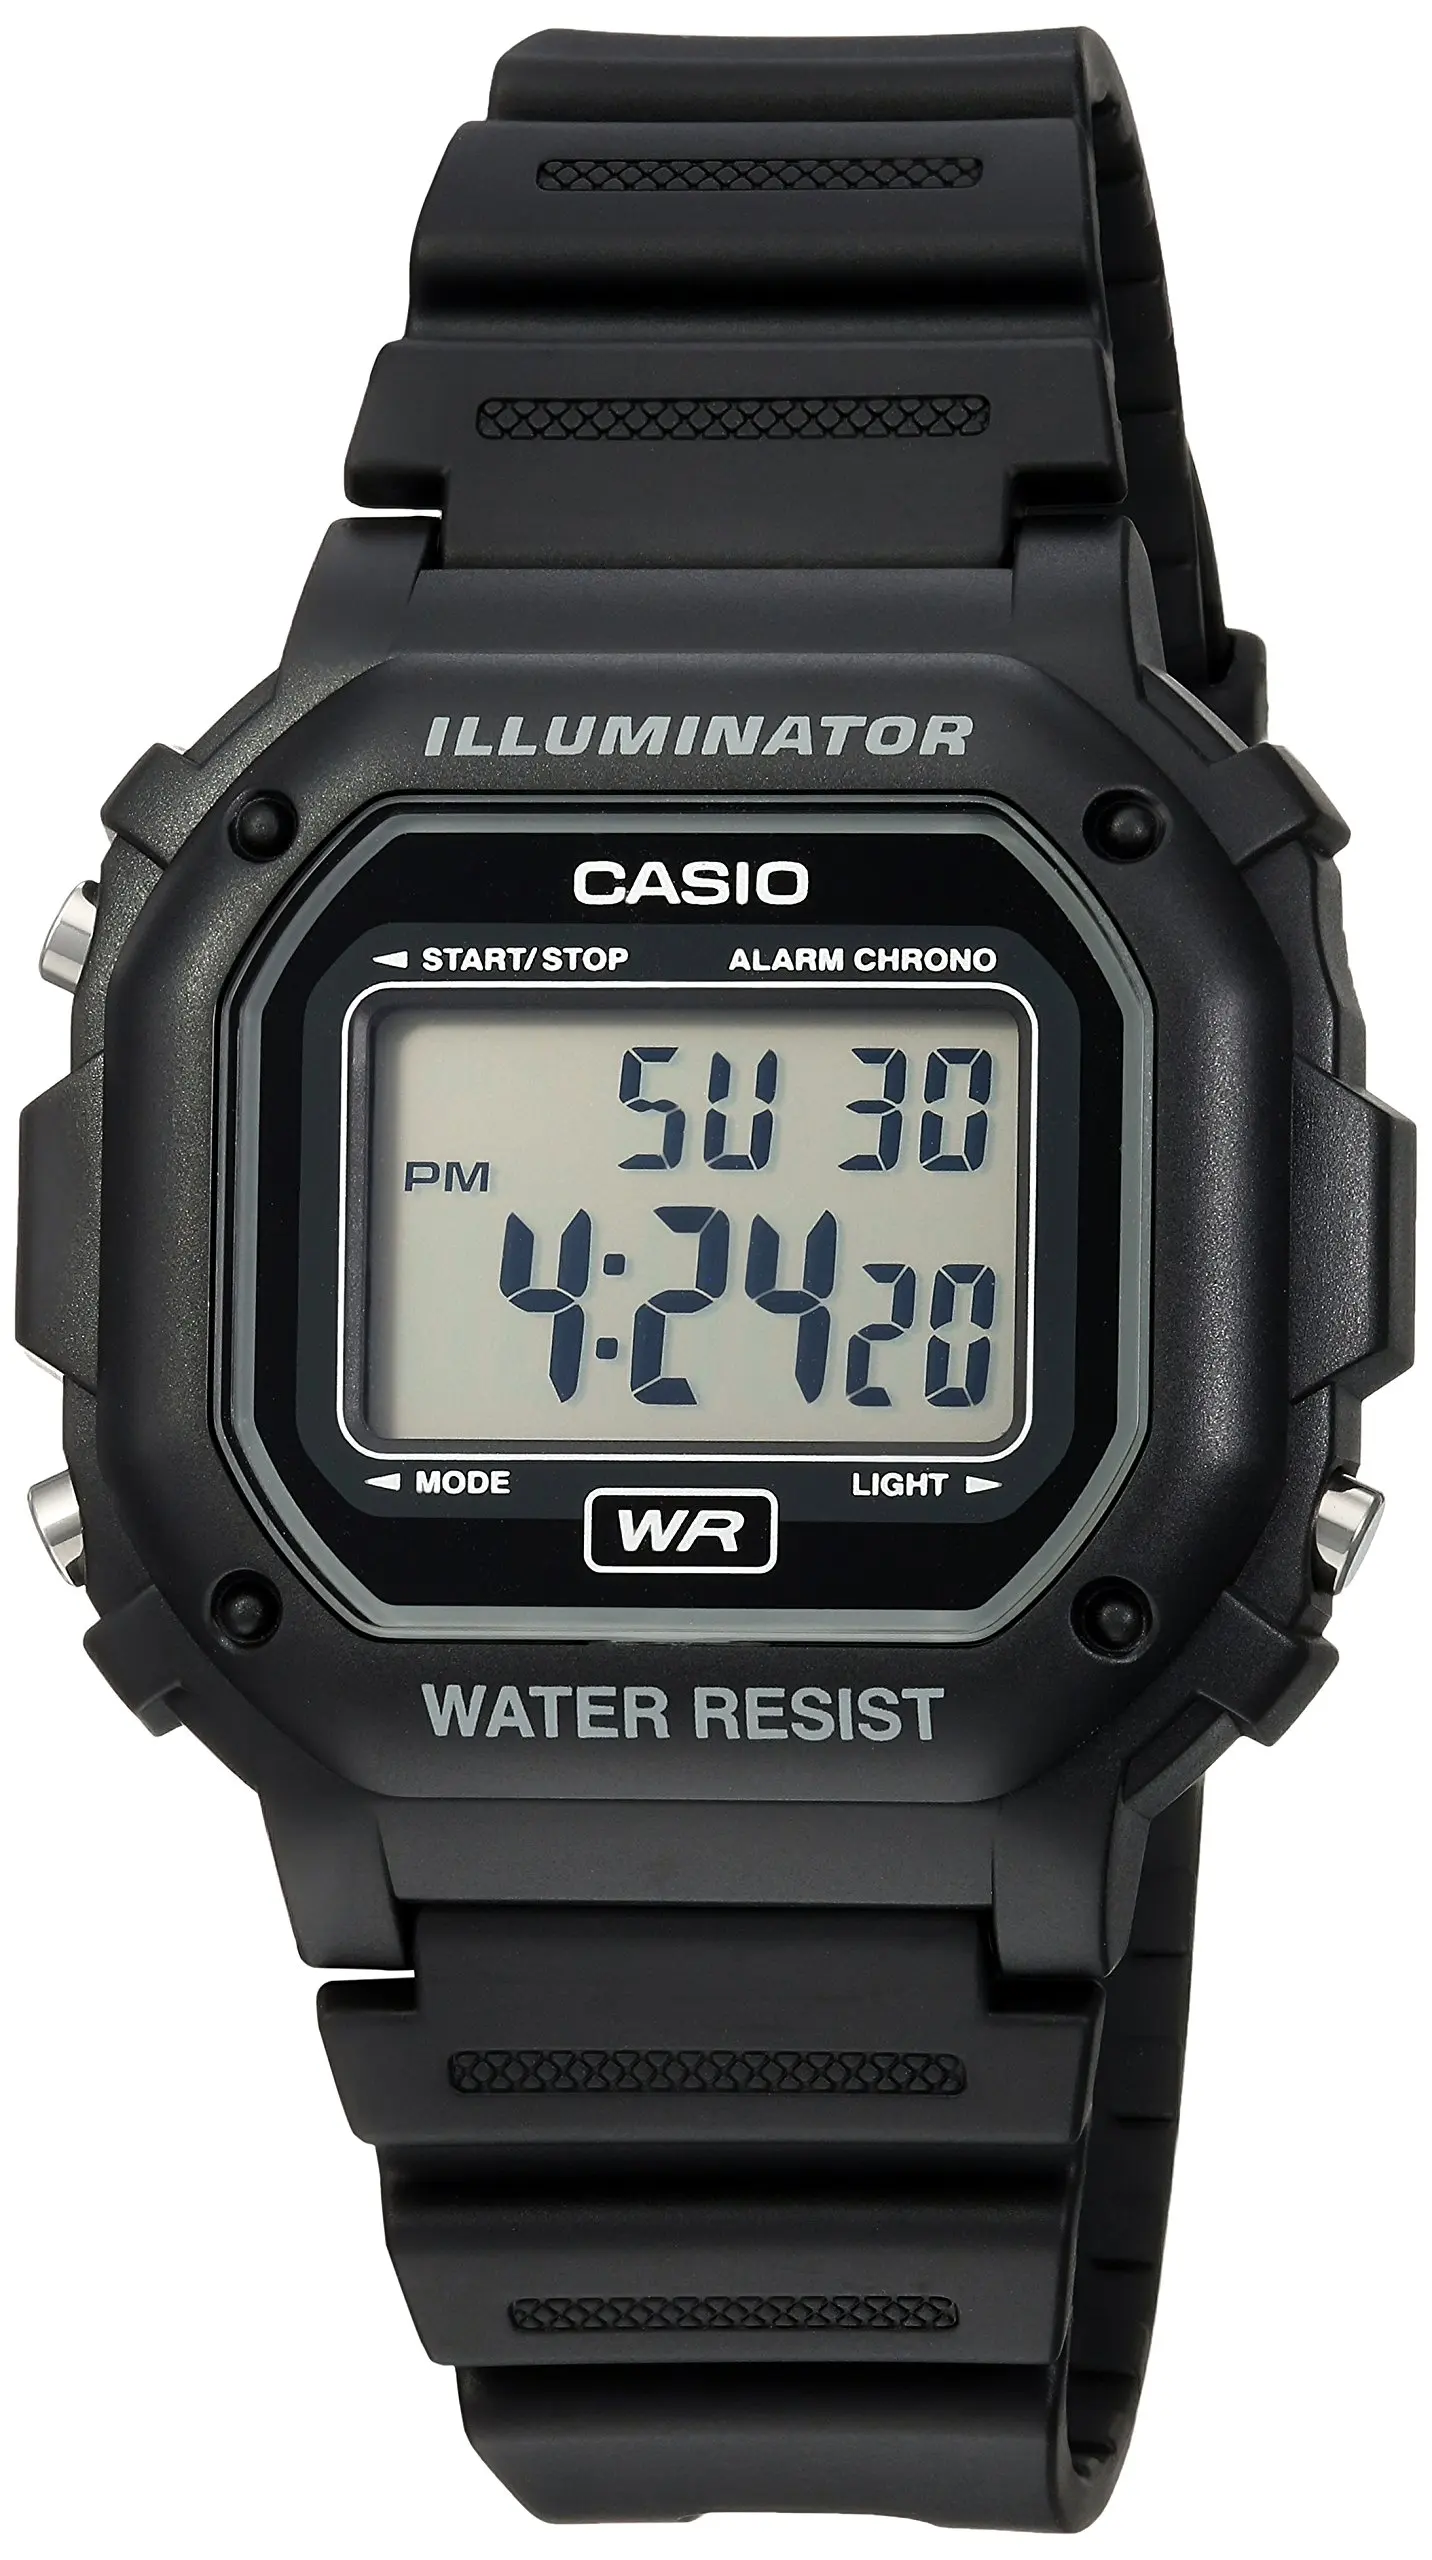 Casio Illuminator Wr100m Watch Manual